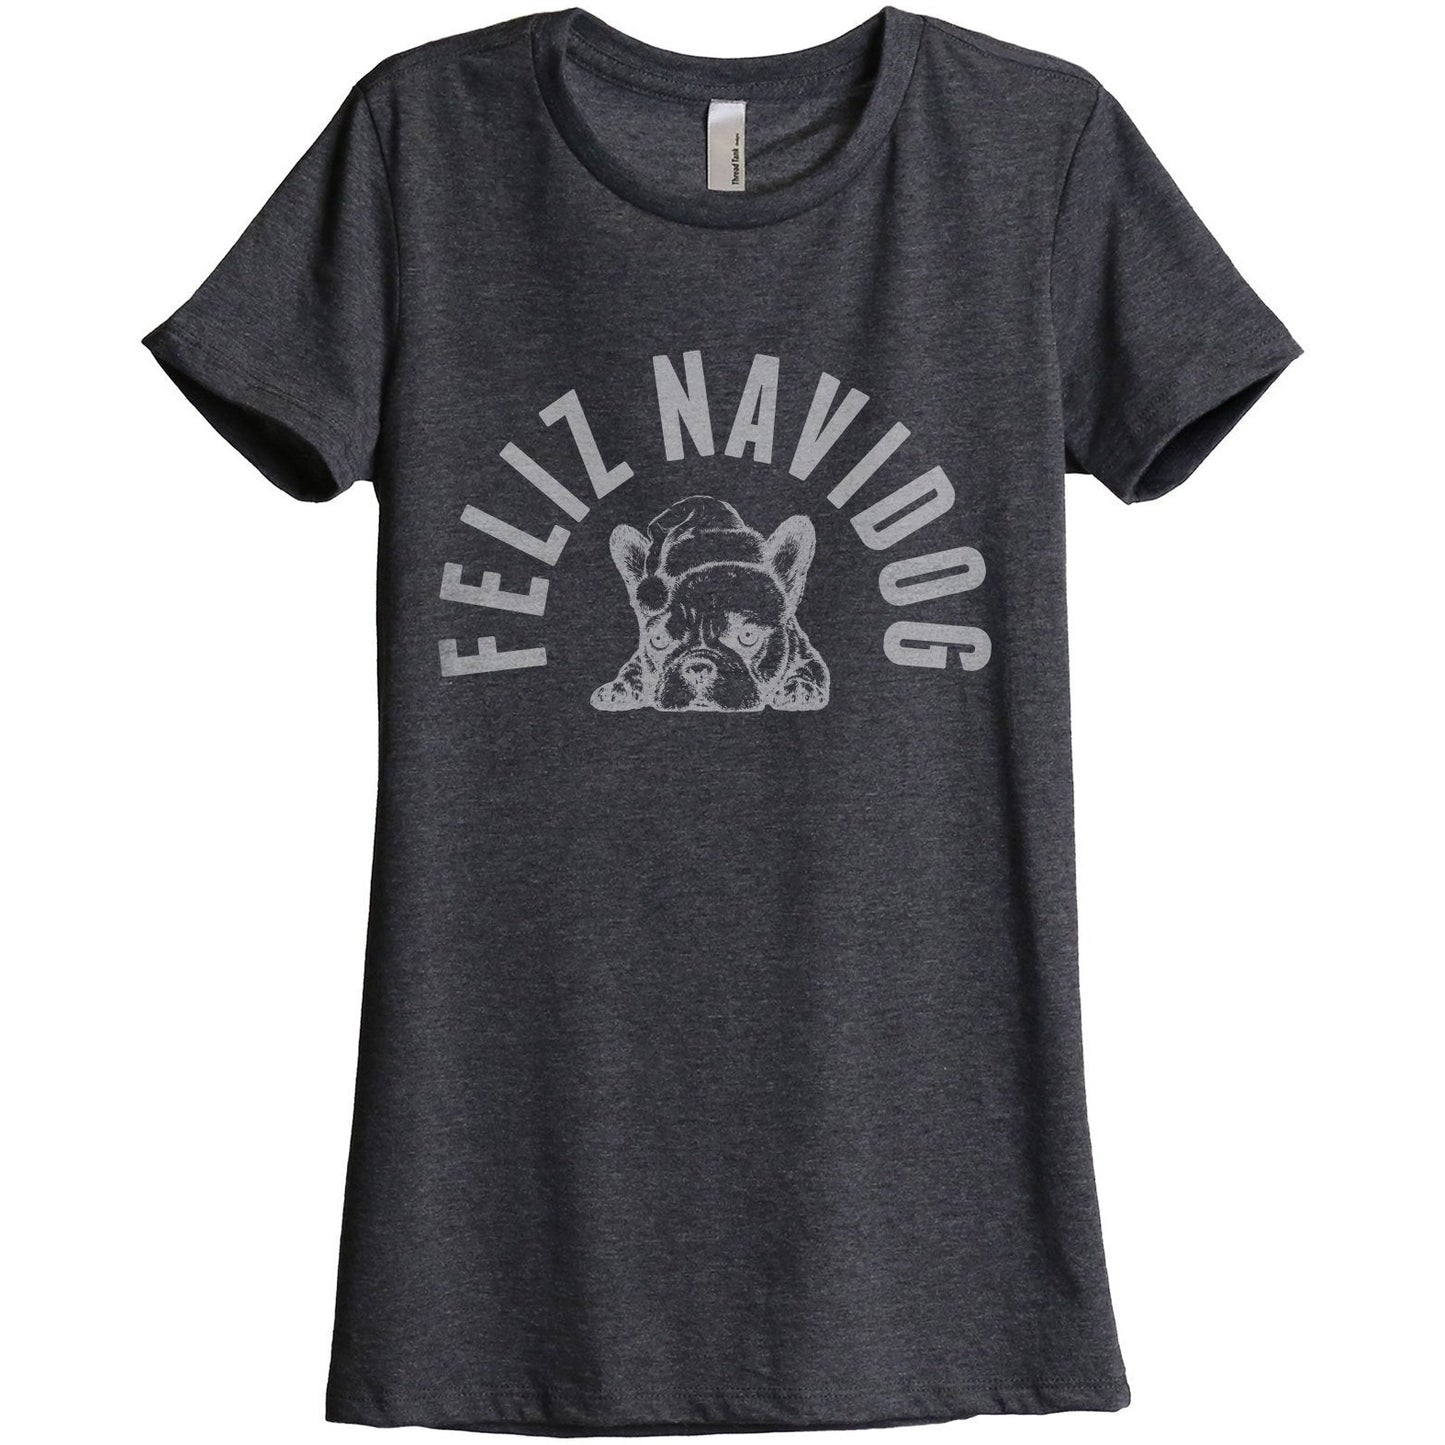 Feliz Navidog Women's Relaxed Crewneck T-Shirt Top Tee Charcoal Grey
